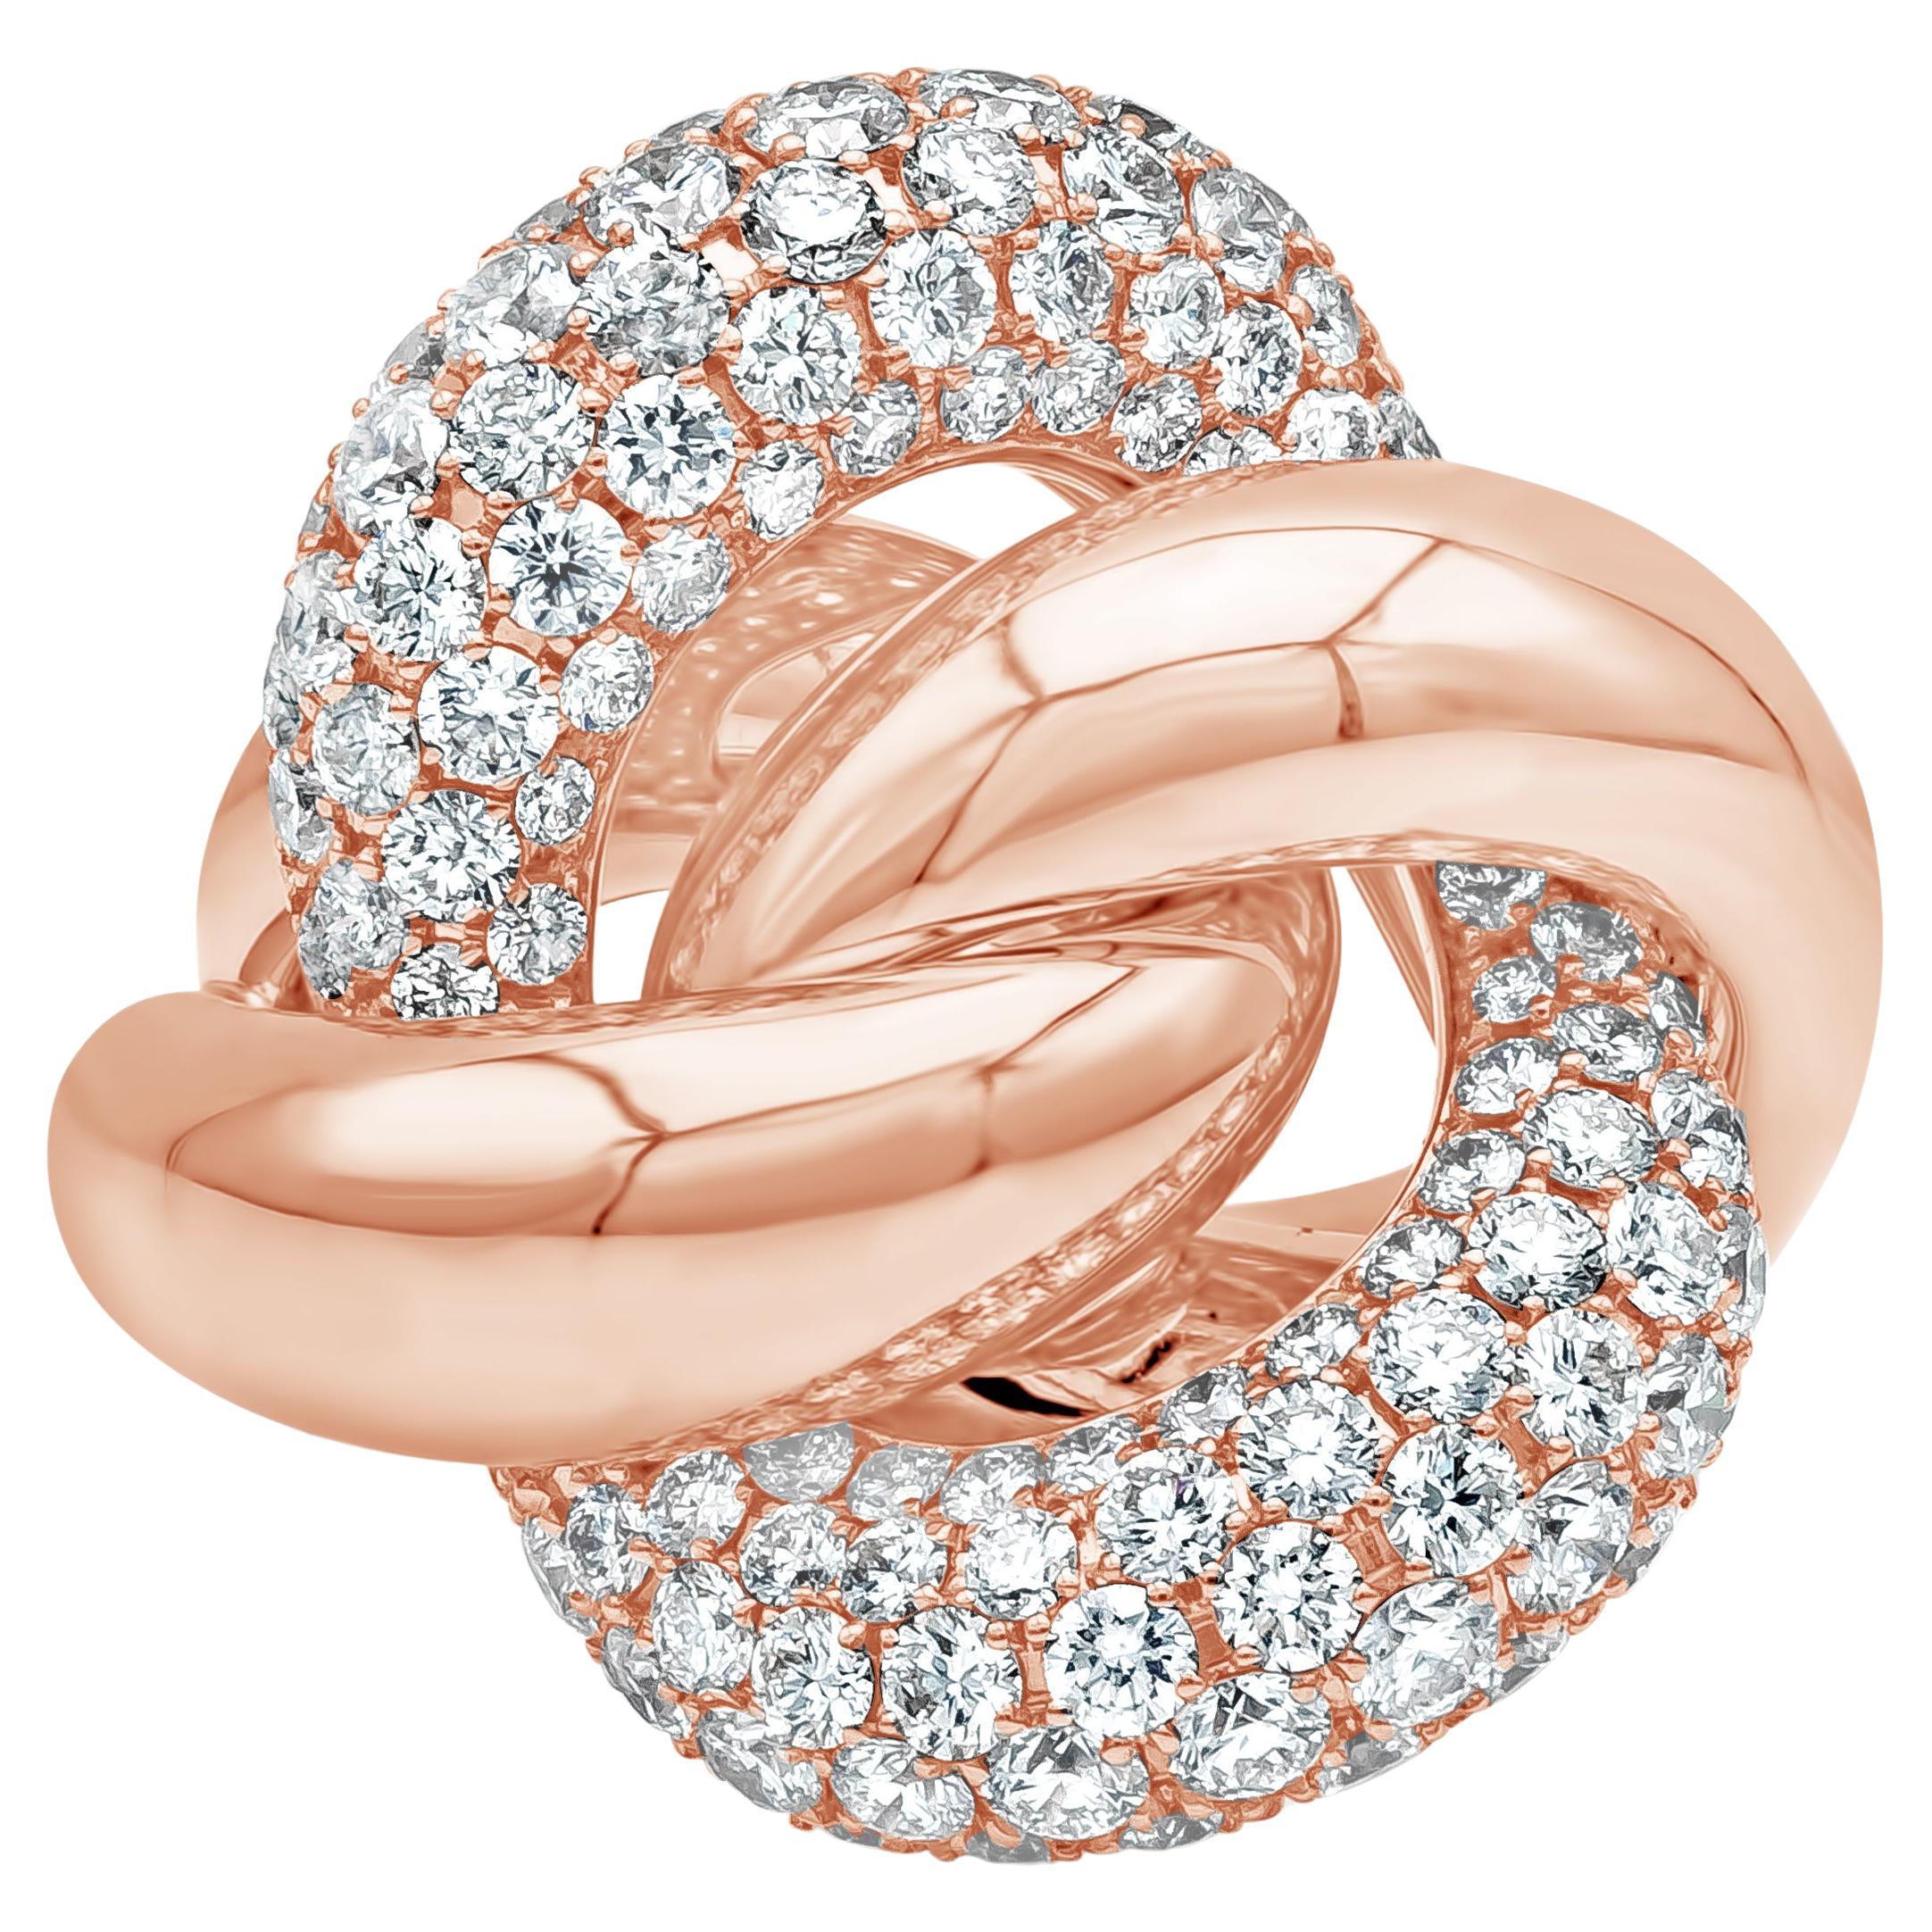 Roman Malakov 5.80 Carats Total Brilliant Round Diamond Intertwined Fashion Ring